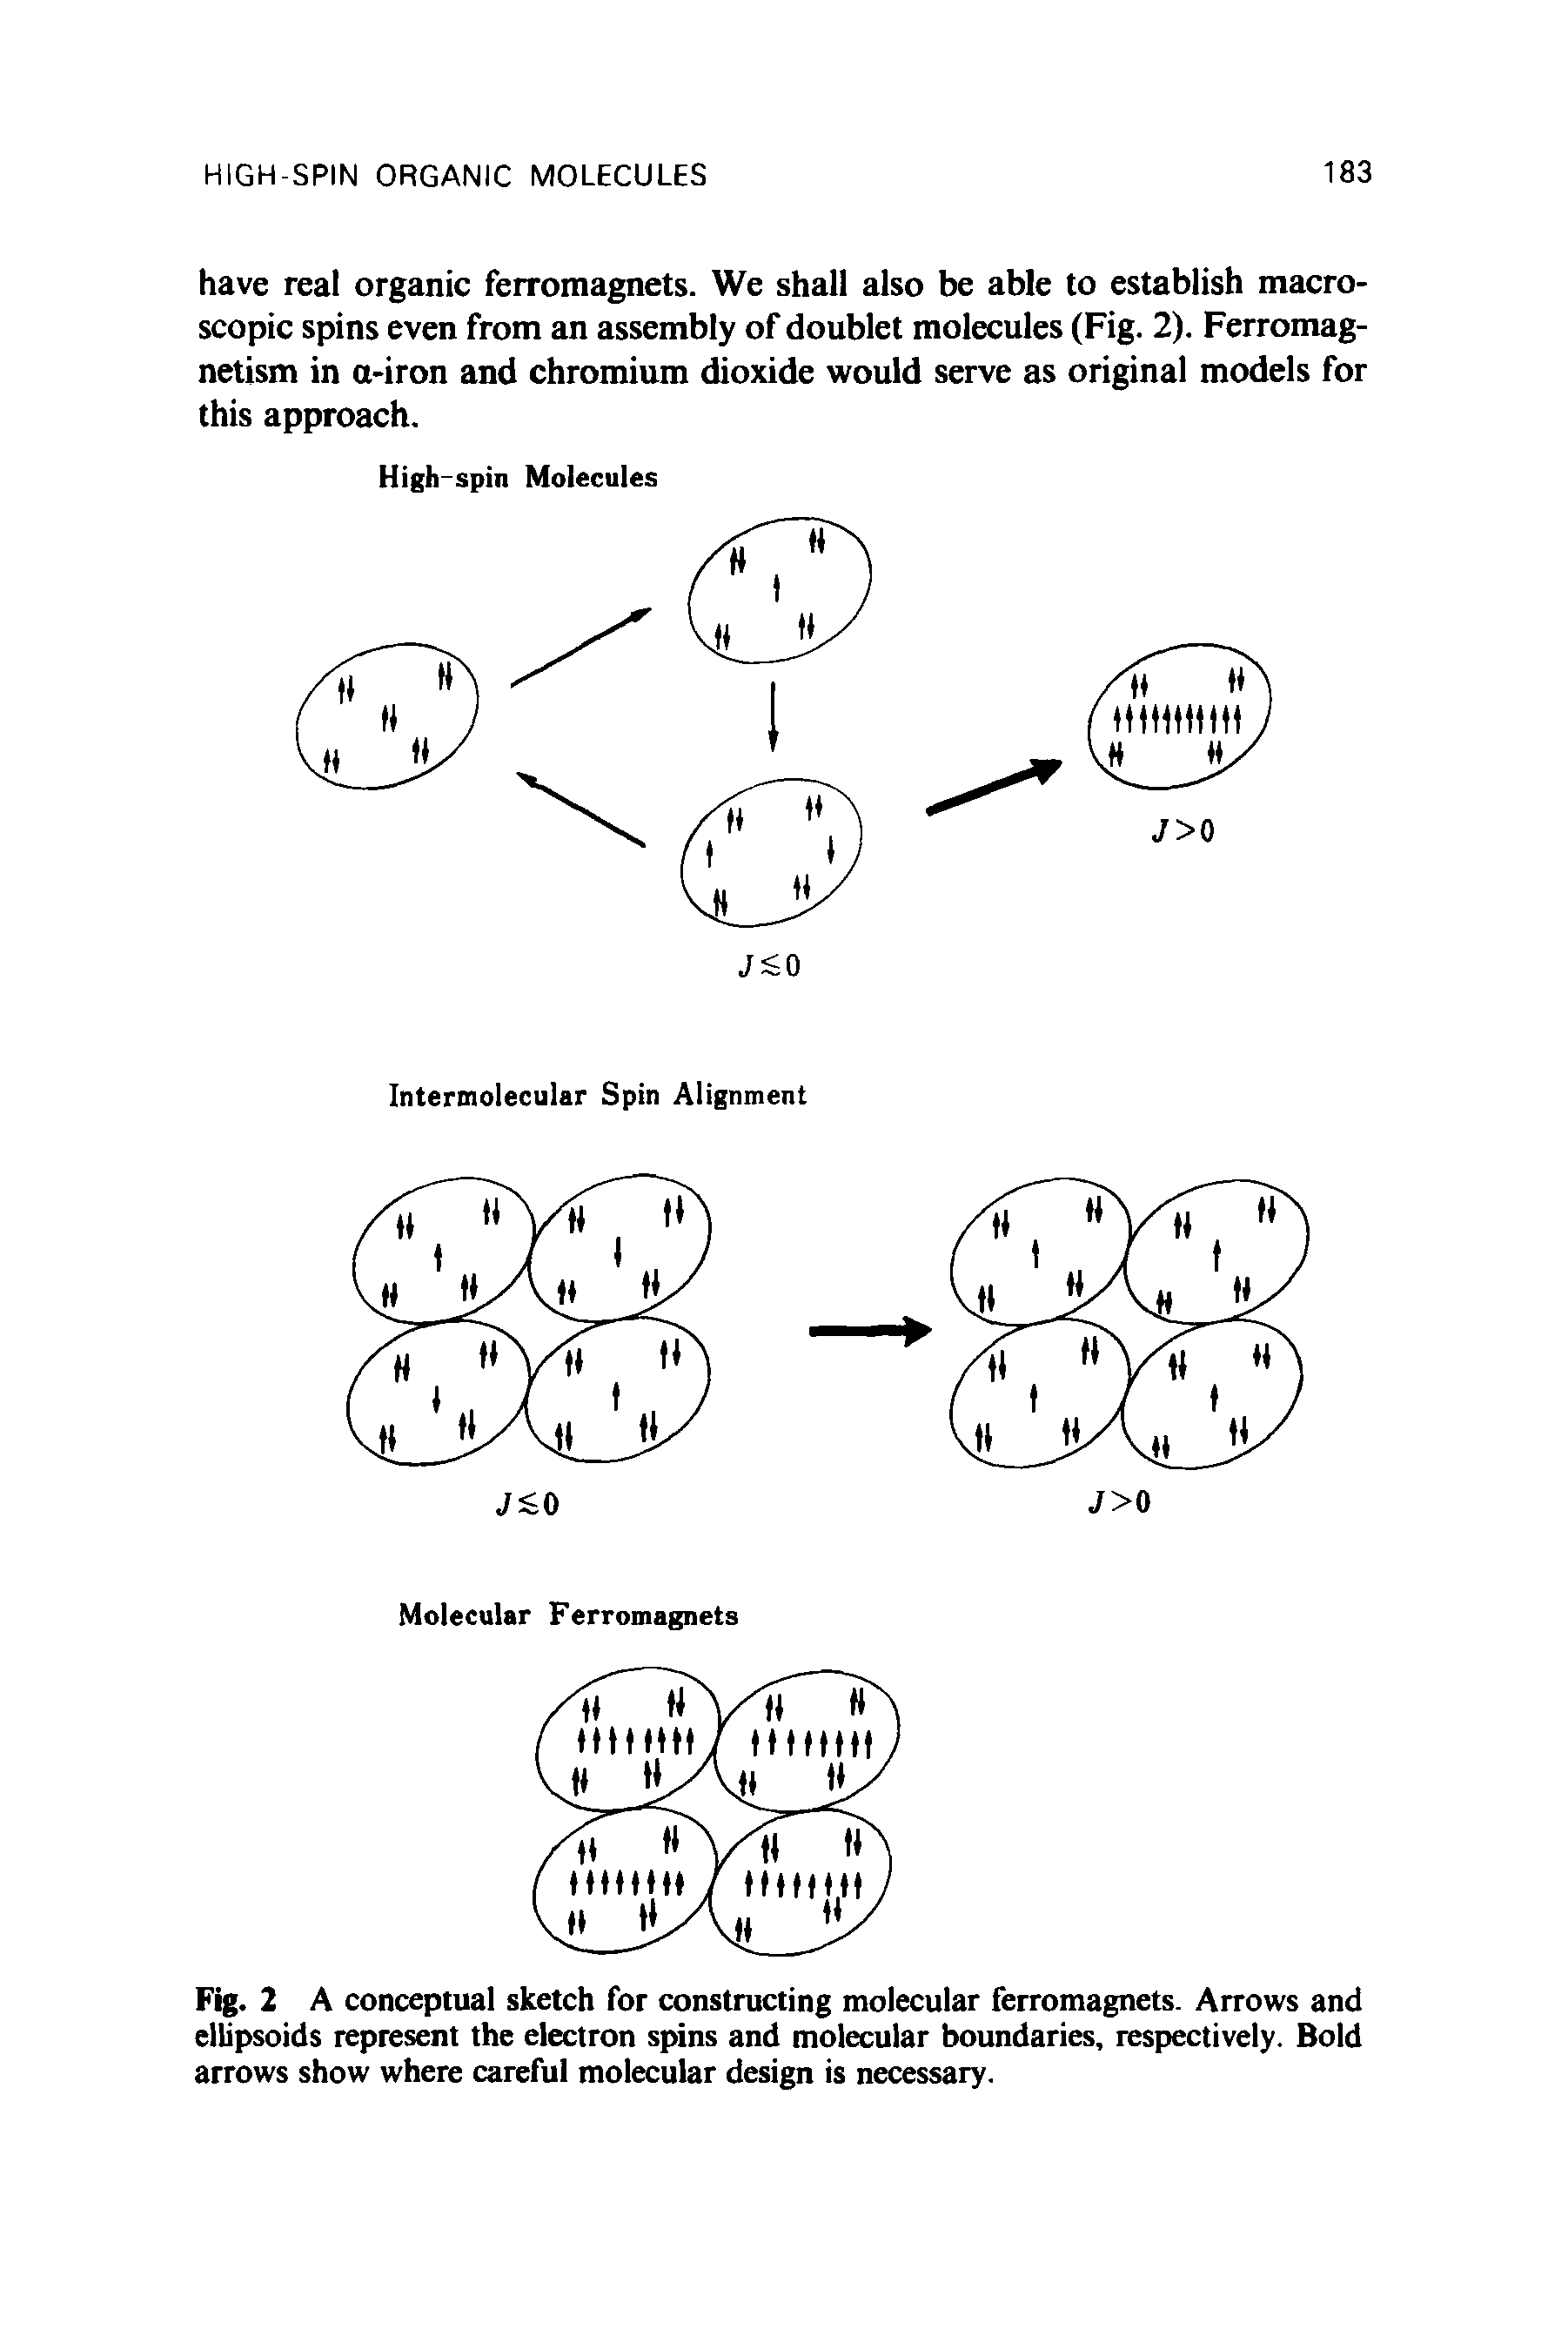 Fig. 2 A conceptual sketch for constructing molecular ferromagnets. Arrows and ellipsoids represent the electron spins and molecular boundaries, respectively. Bold arrows show where careful molecular design is necessary.